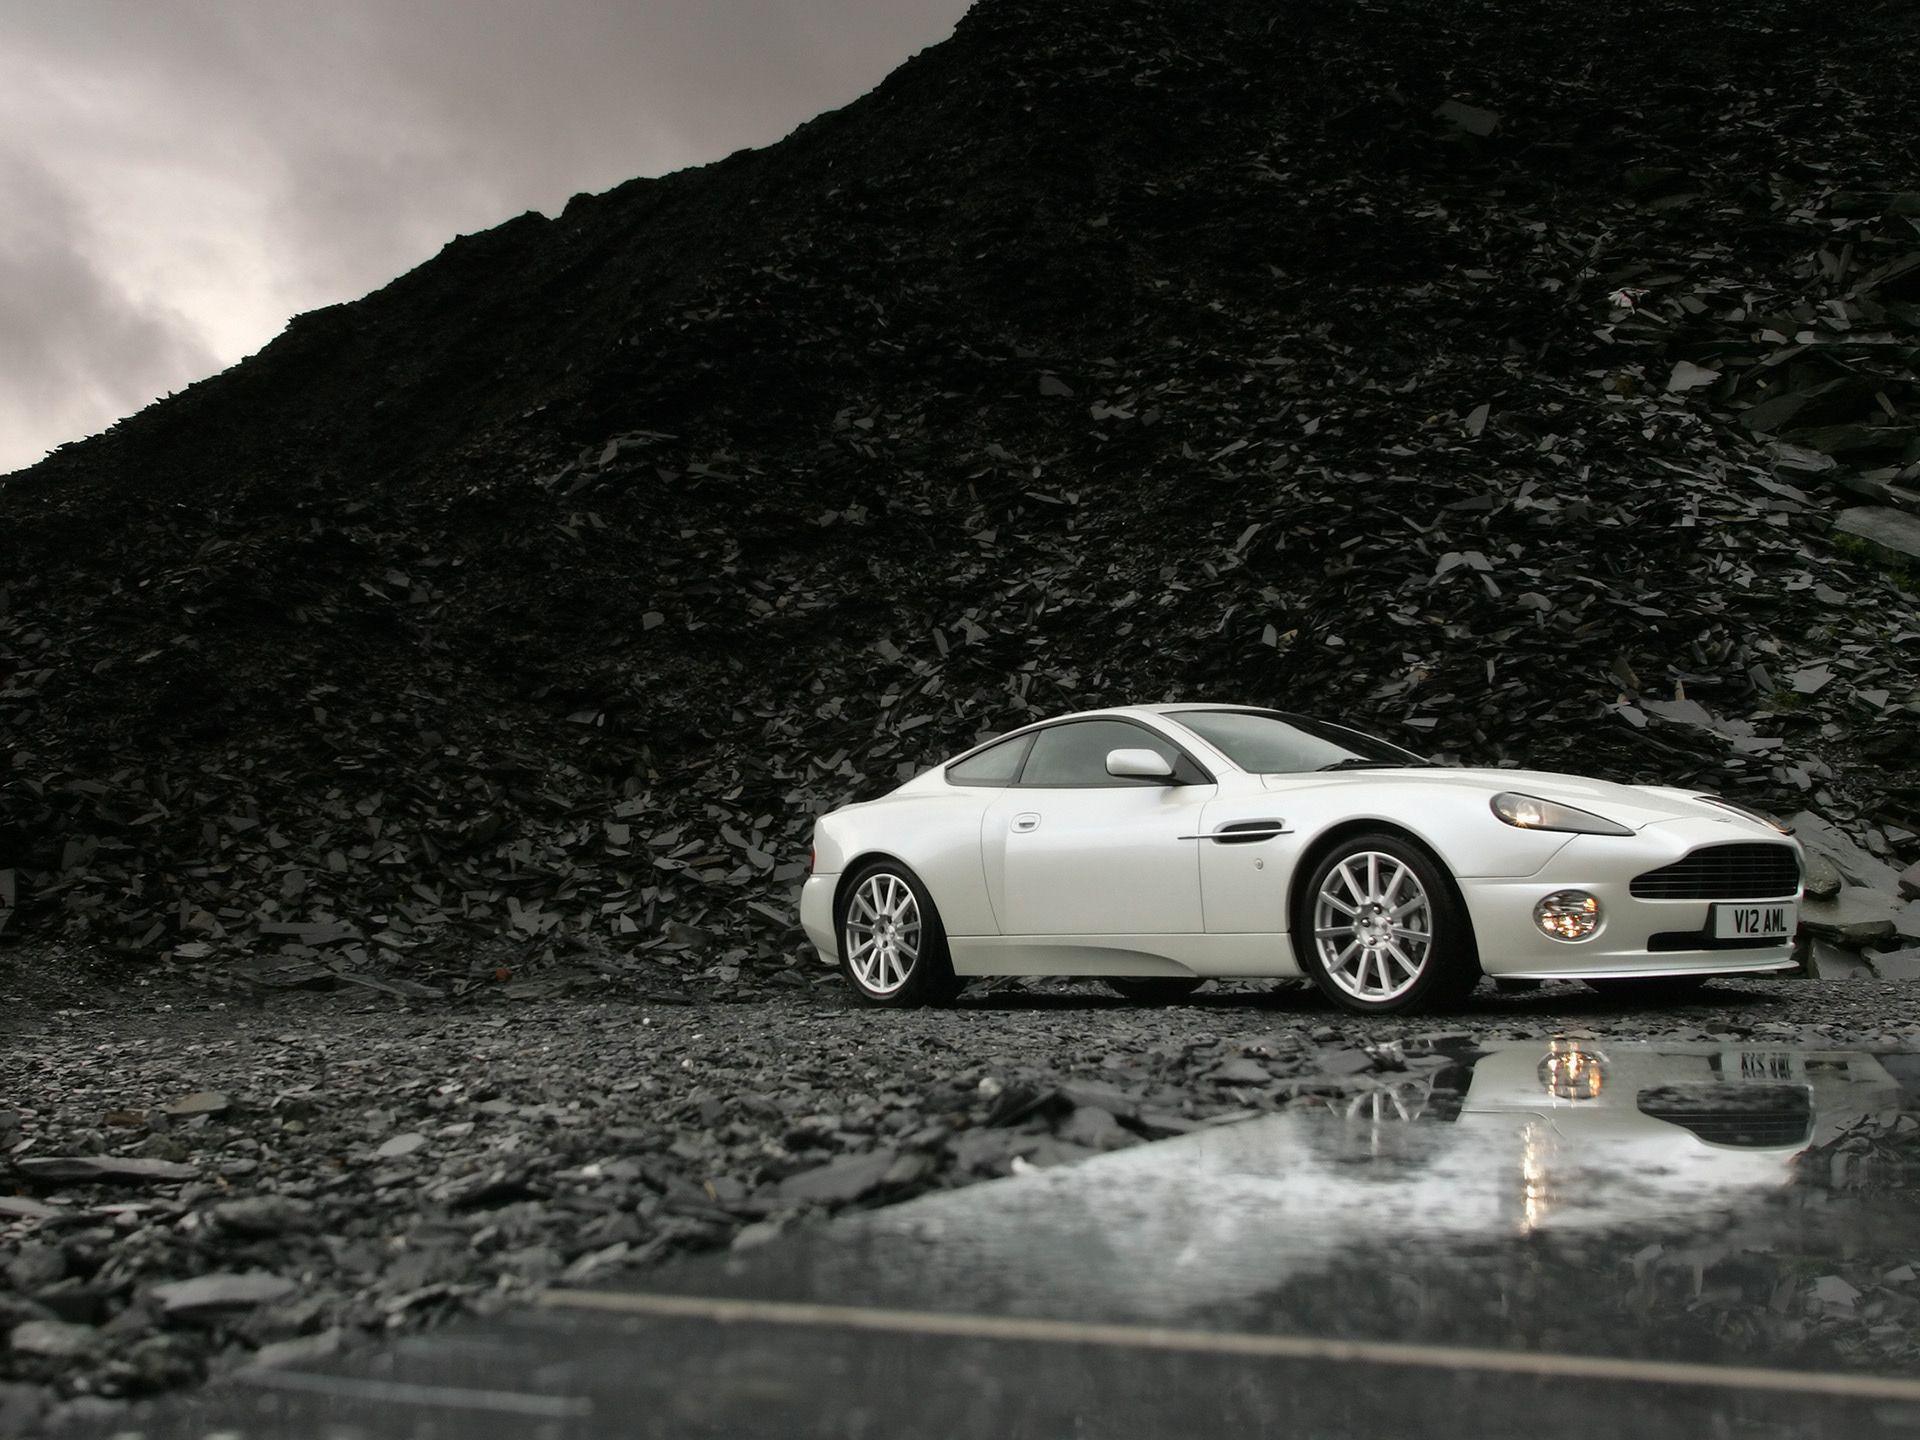 Aston Martin Vanquish Wallpaper, Picture, Image